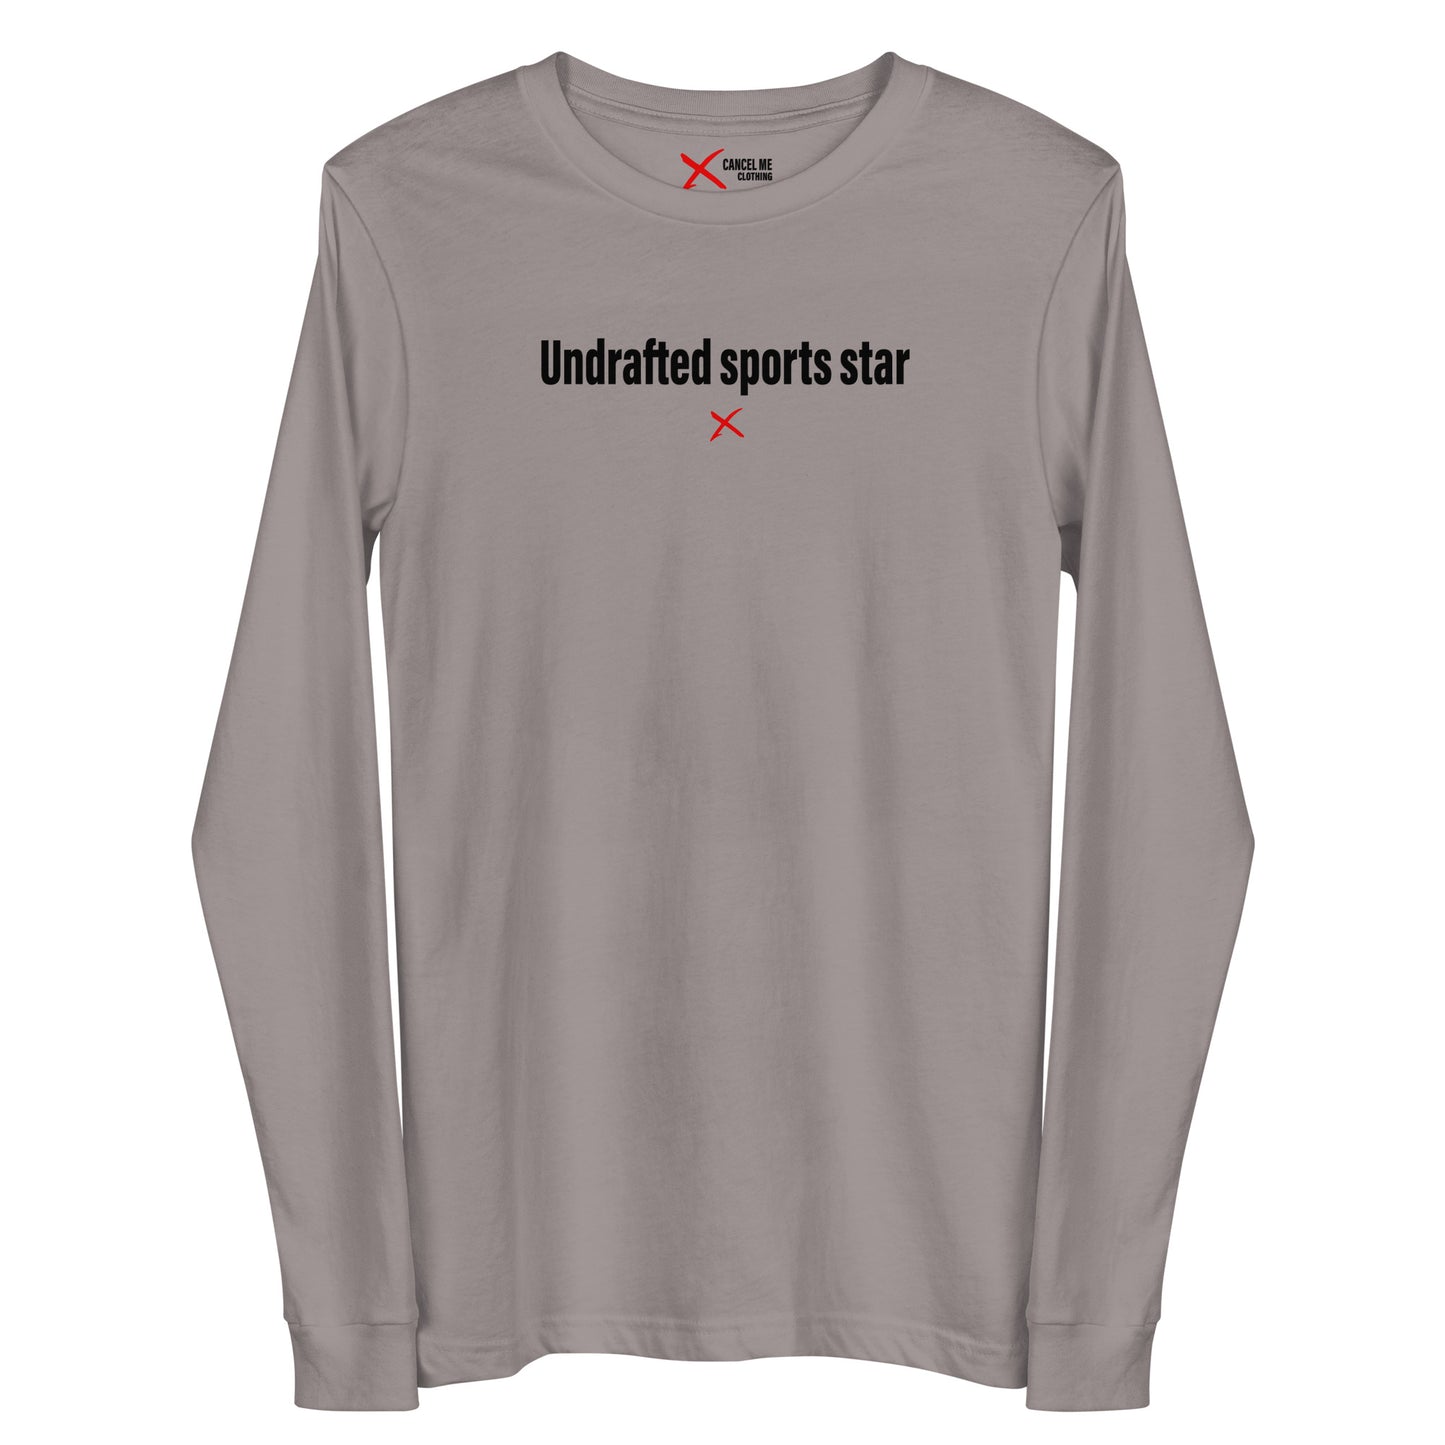 Undrafted sports star - Longsleeve